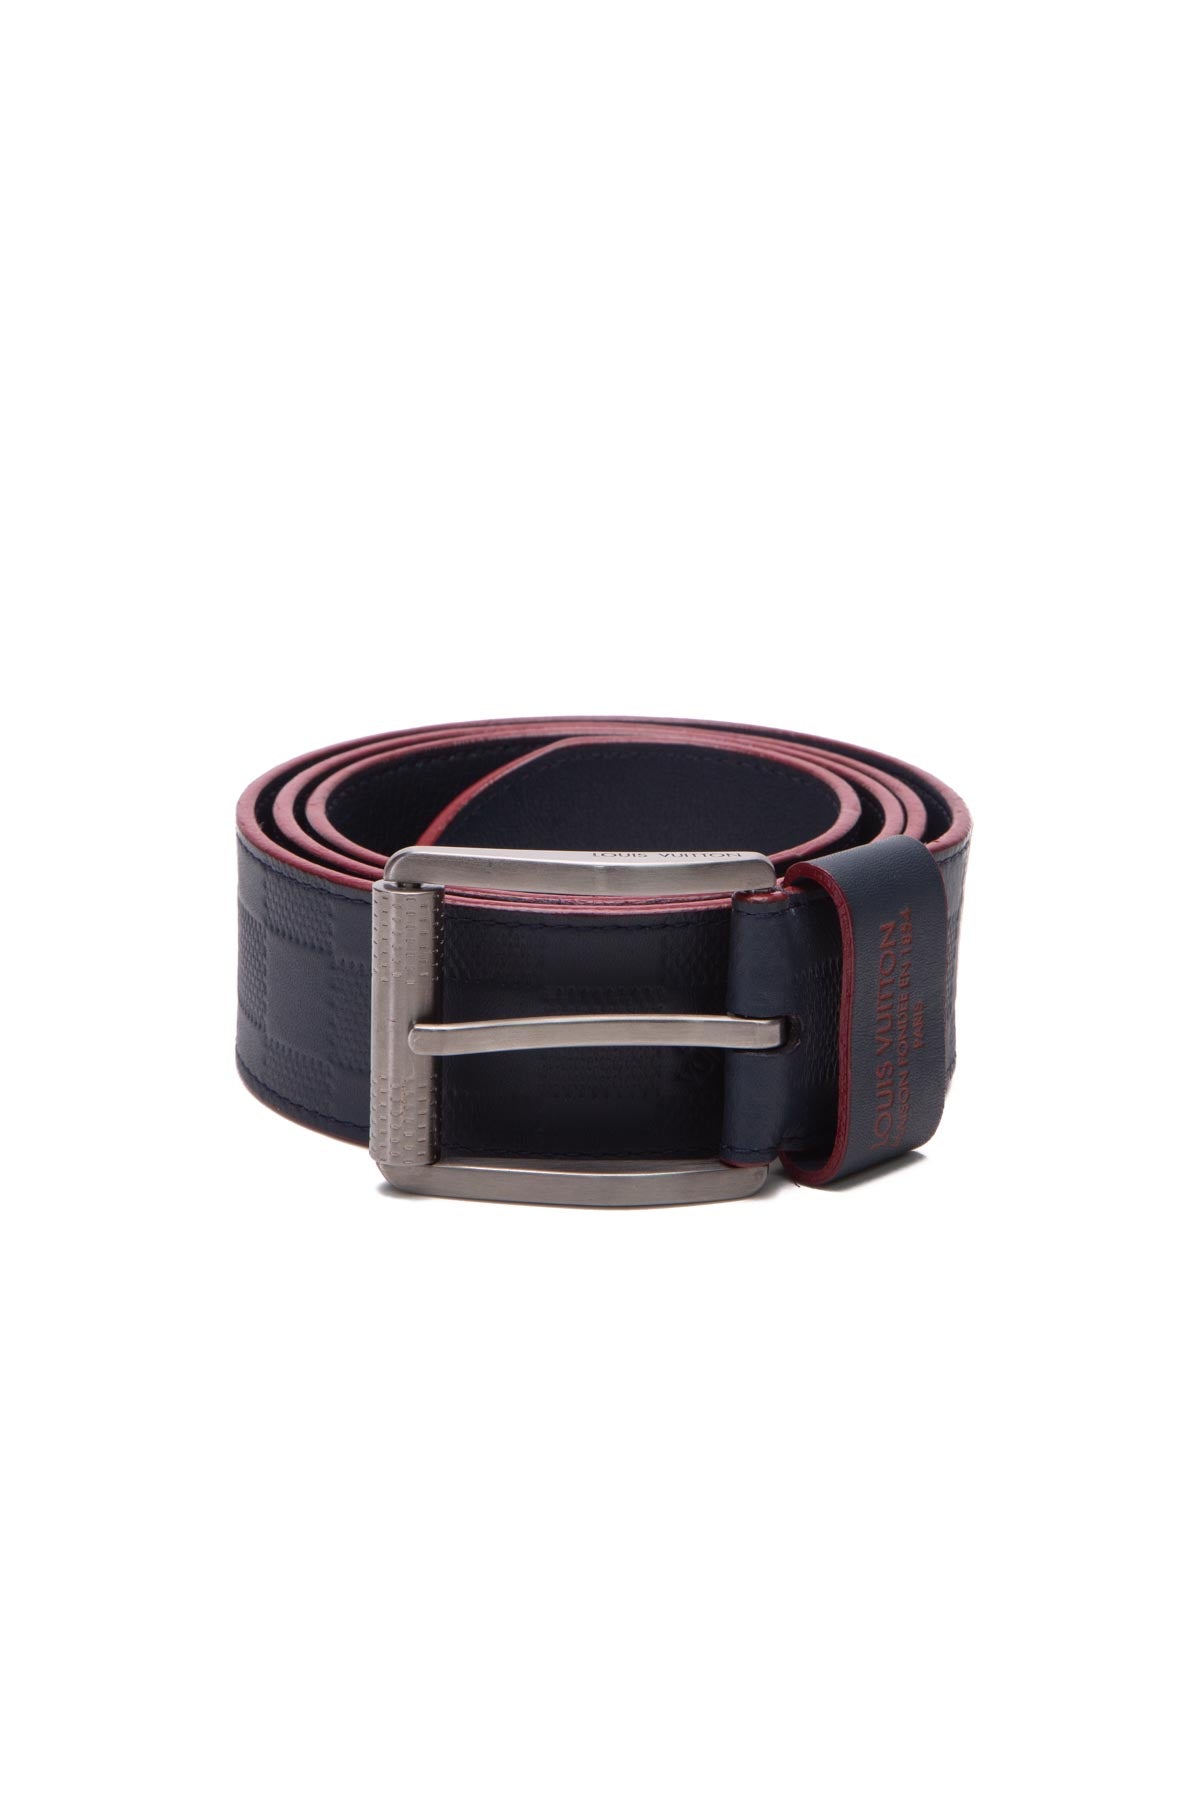 Buy Siza Fashion Mens Black Leather Belt LV Louis Belt Men Fashion